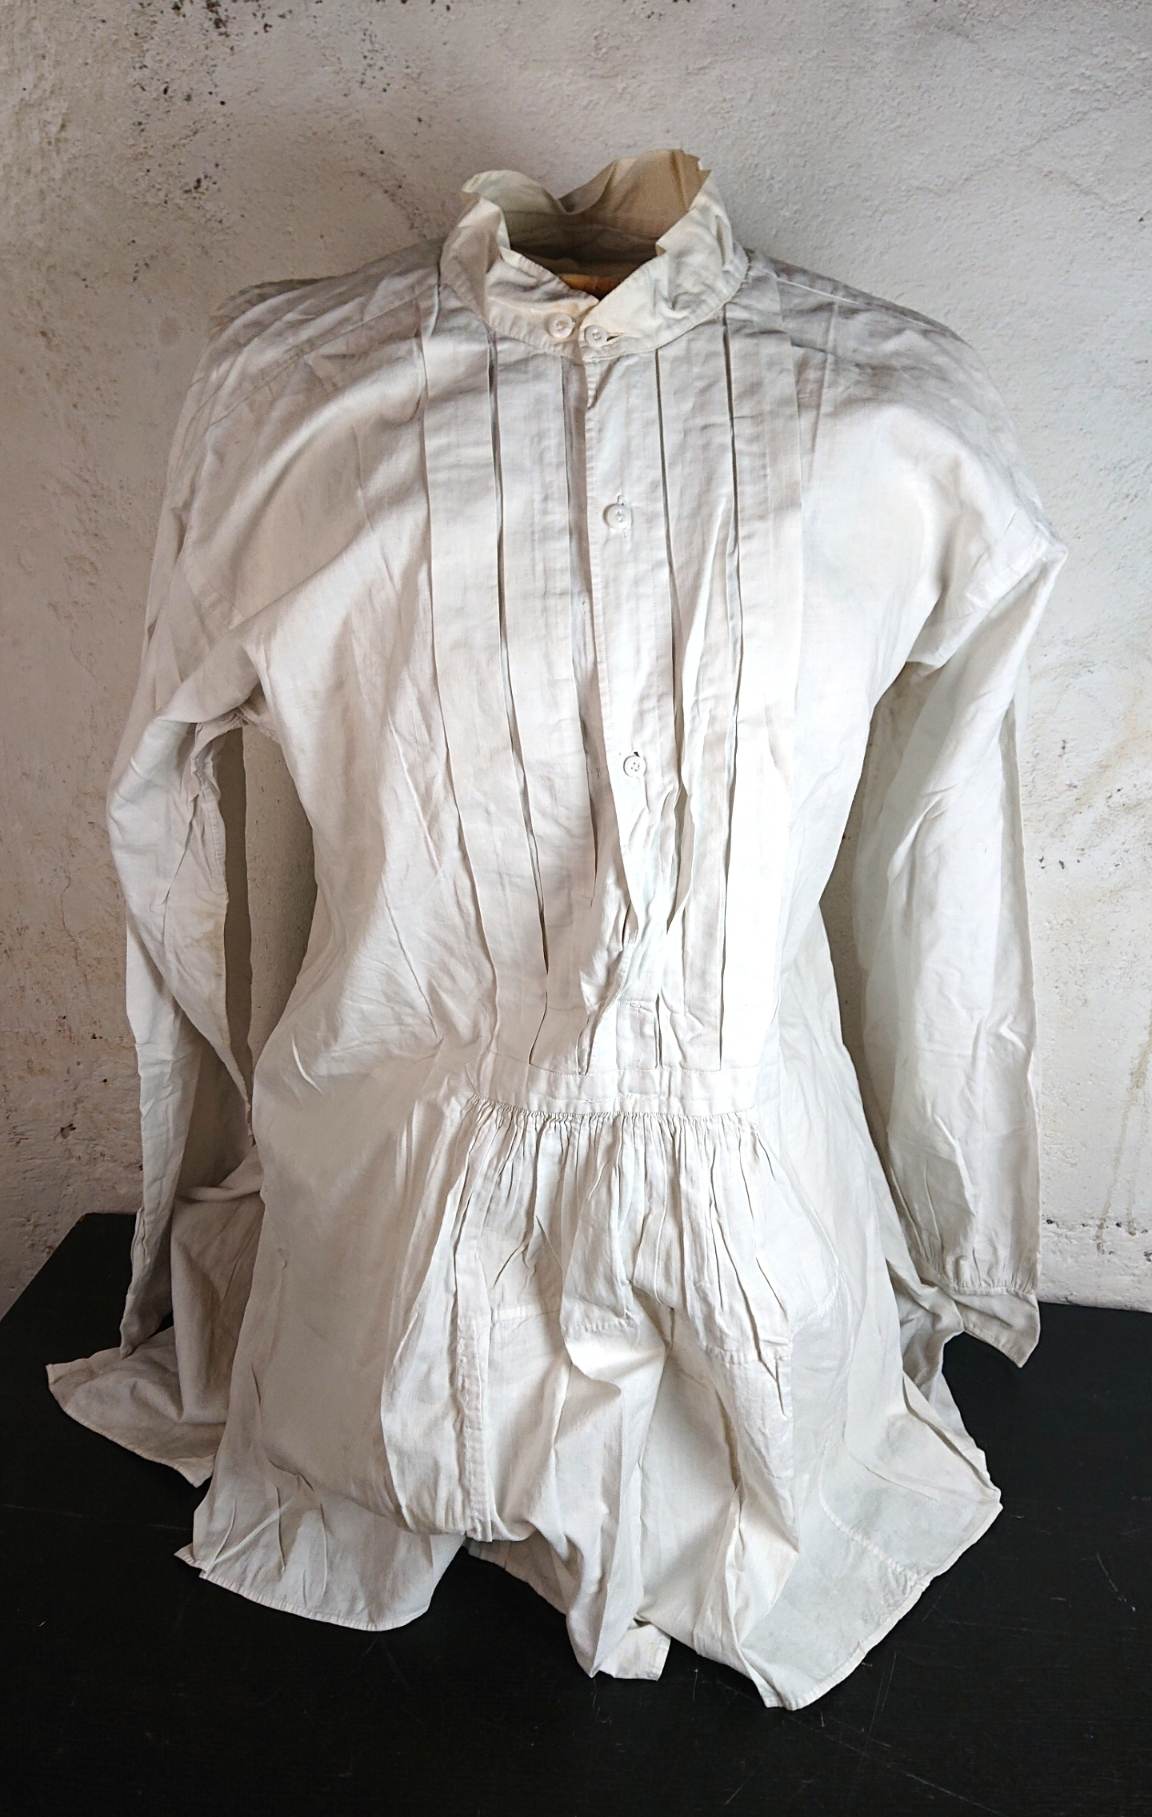 militaria : Chemise homme 1900-10 / Men's shirt 1900-10's